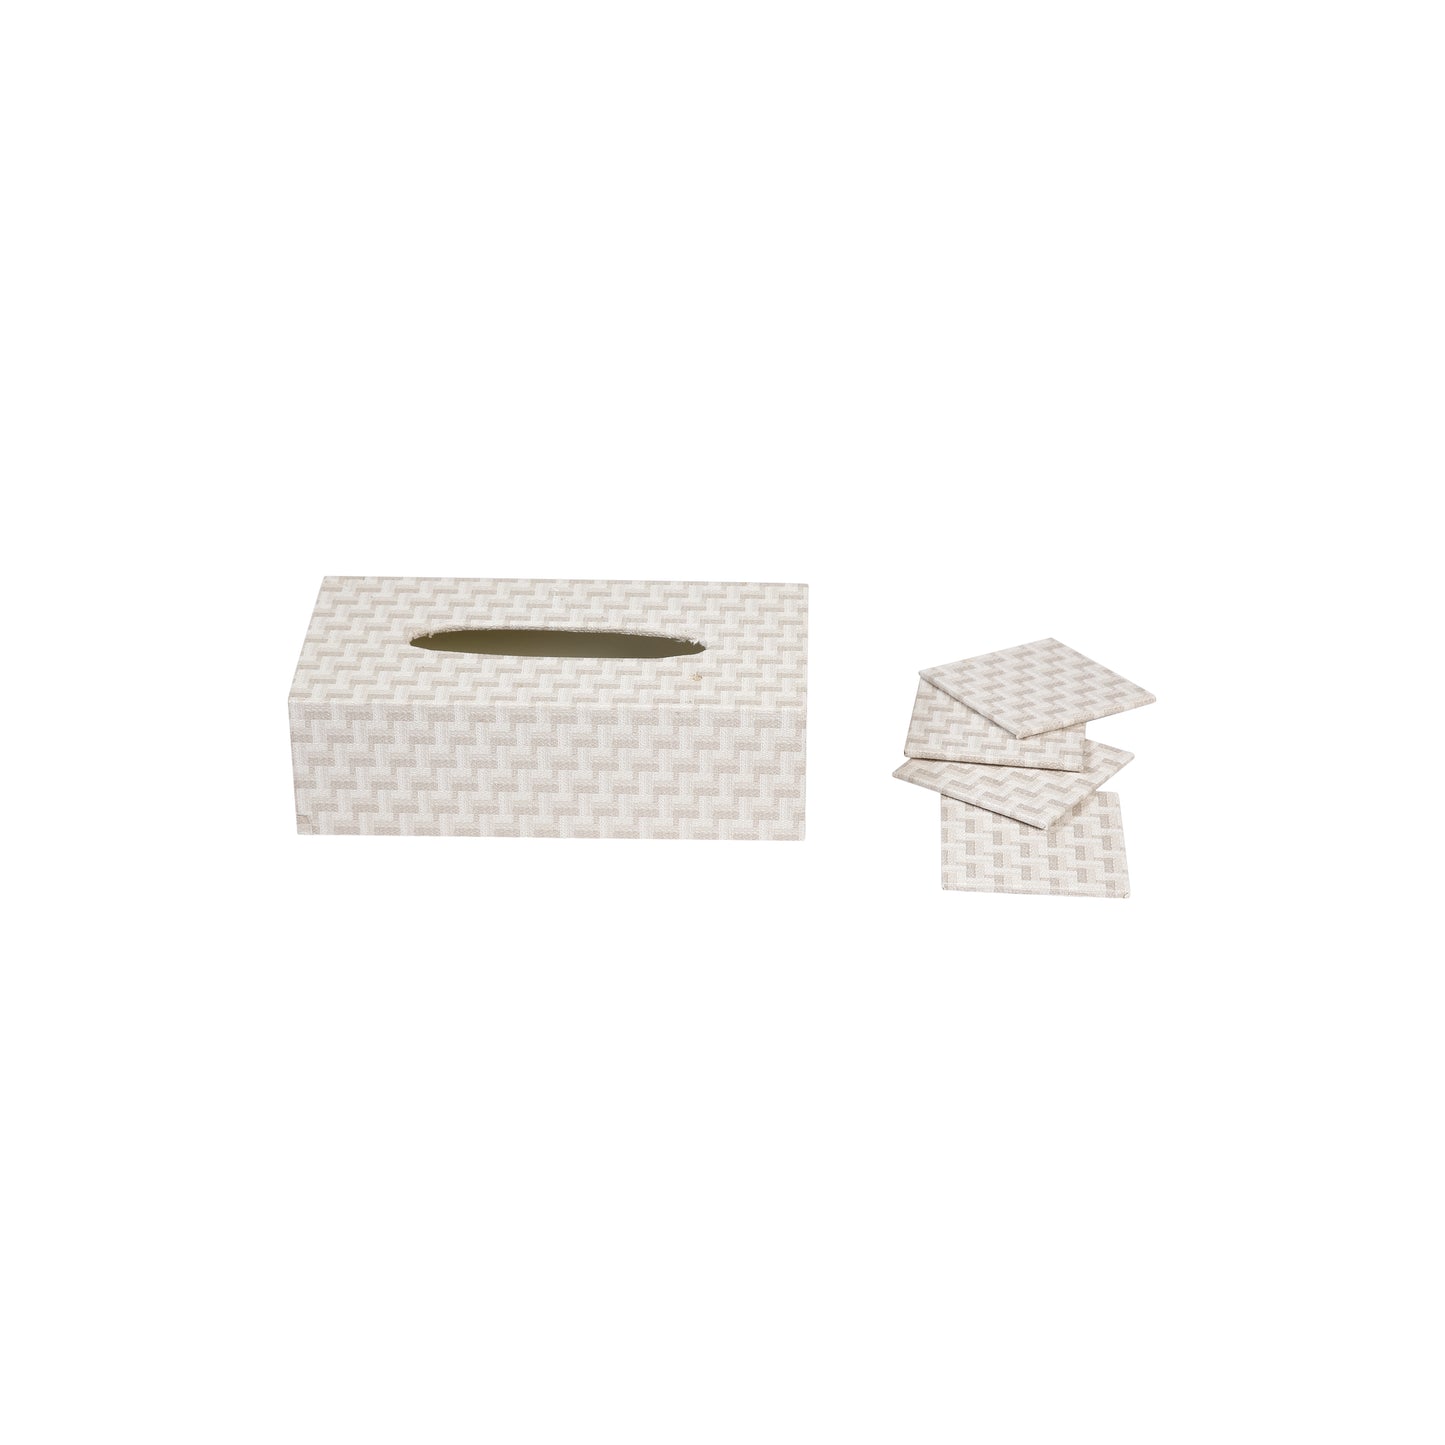 A Tiny Mistake Herringbone Beige Rectangle Tissue Box, 26 x 13 x 8 cm